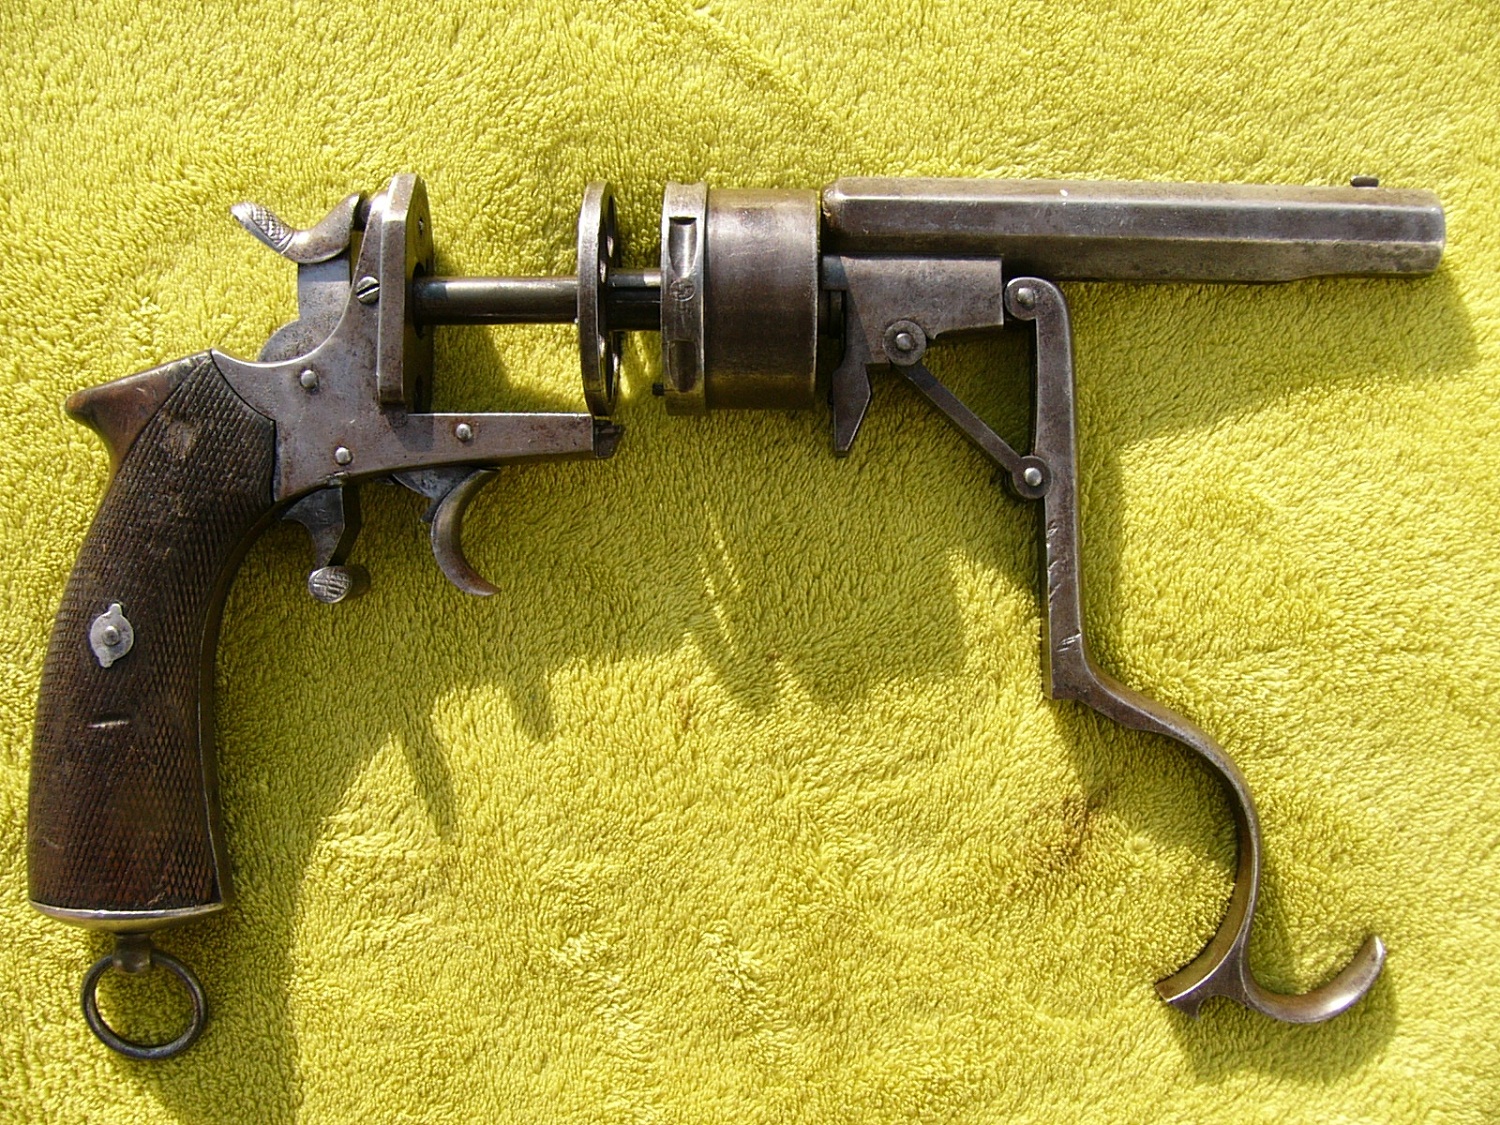 Galand Revolver Manufacture Liegeoise d'armes a Feu